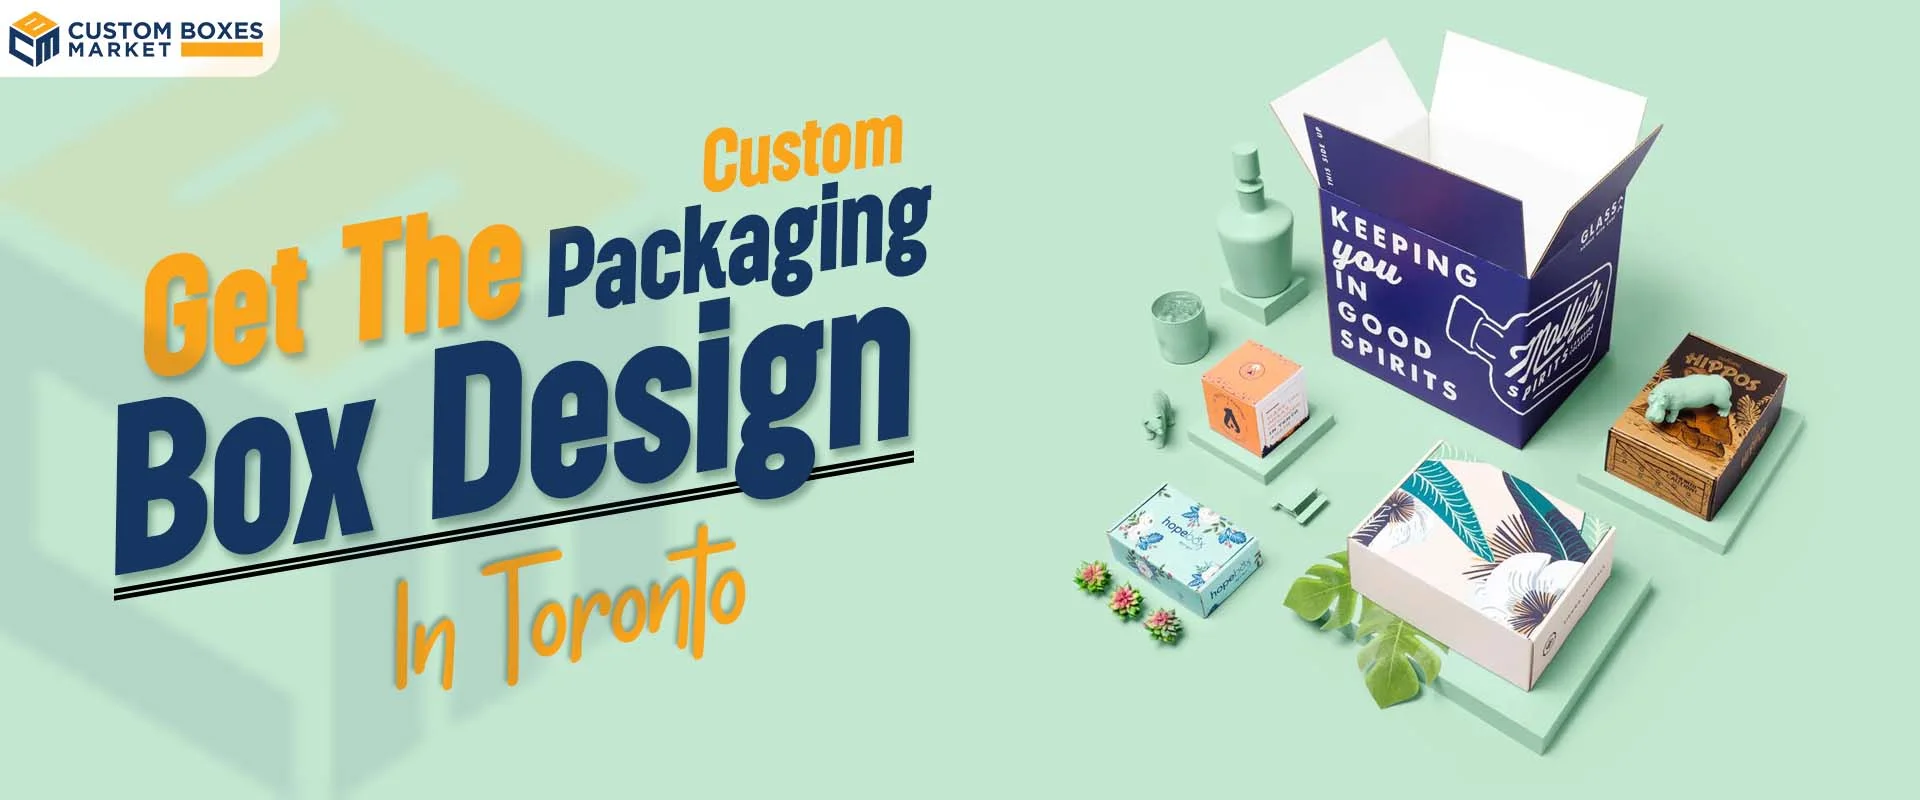 Get The Custom Packaging Box Design In Toronto